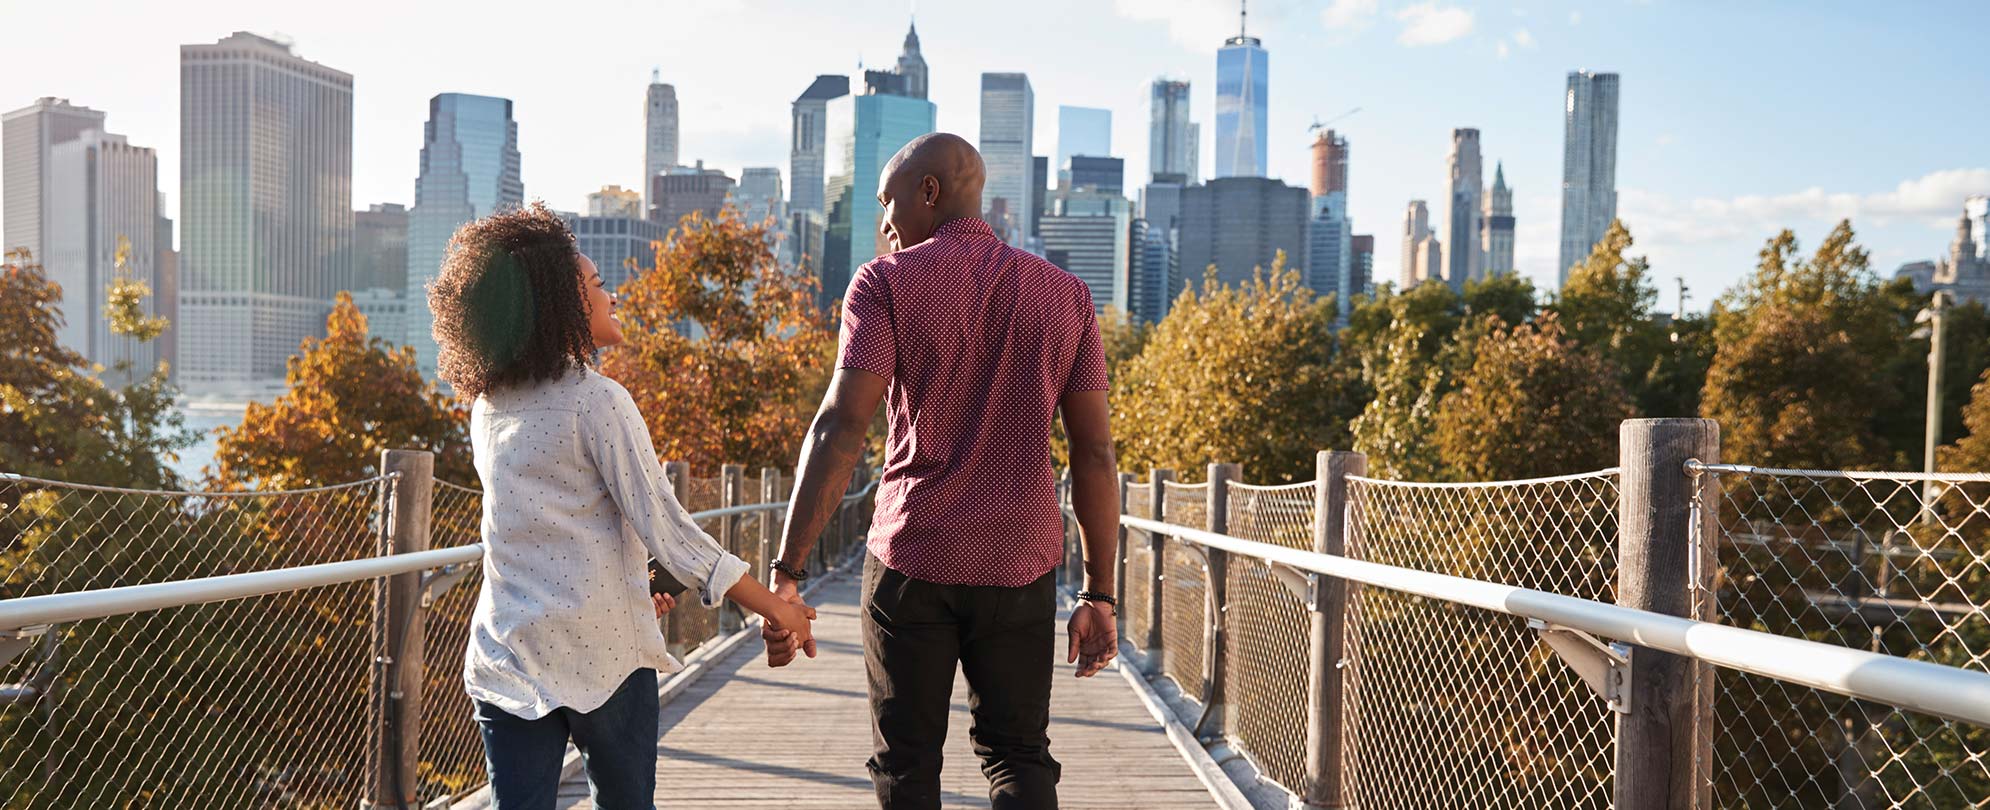 A man and a woman hold hands and walk along a boardwalk toward a city skyline